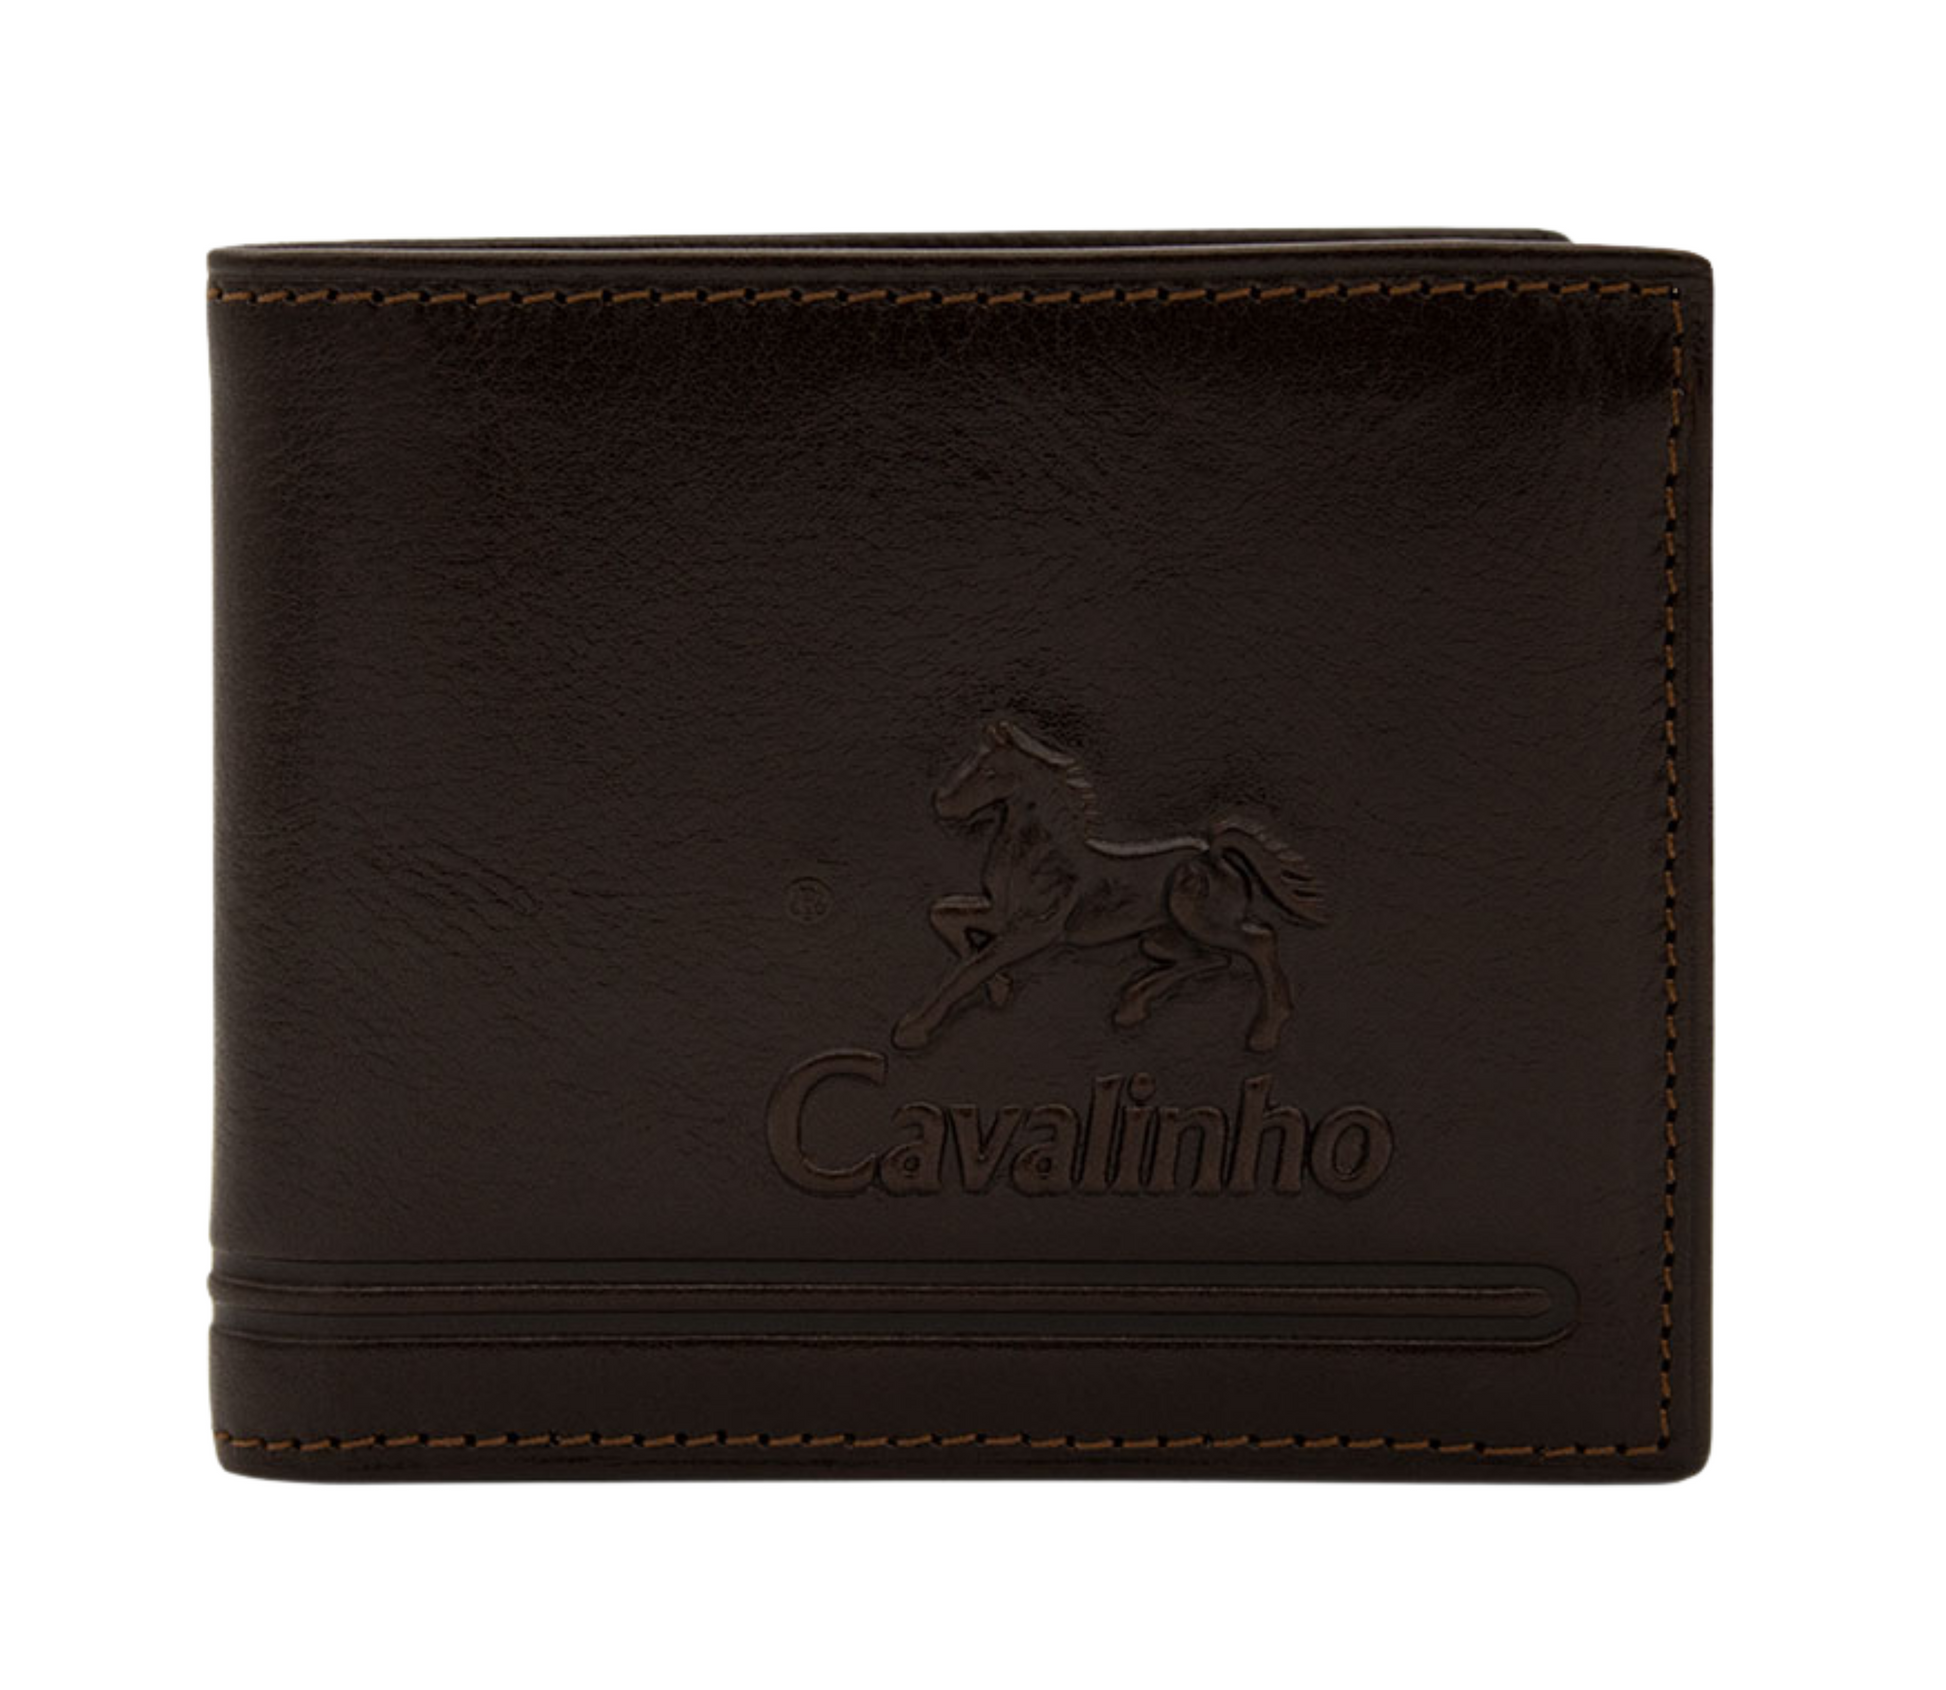 Cavalinho Men's Trifold Slim Leather Wallet - Brown - 28610554brown1_0b8e3daa-632d-4c54-b527-dddbecd4bd43